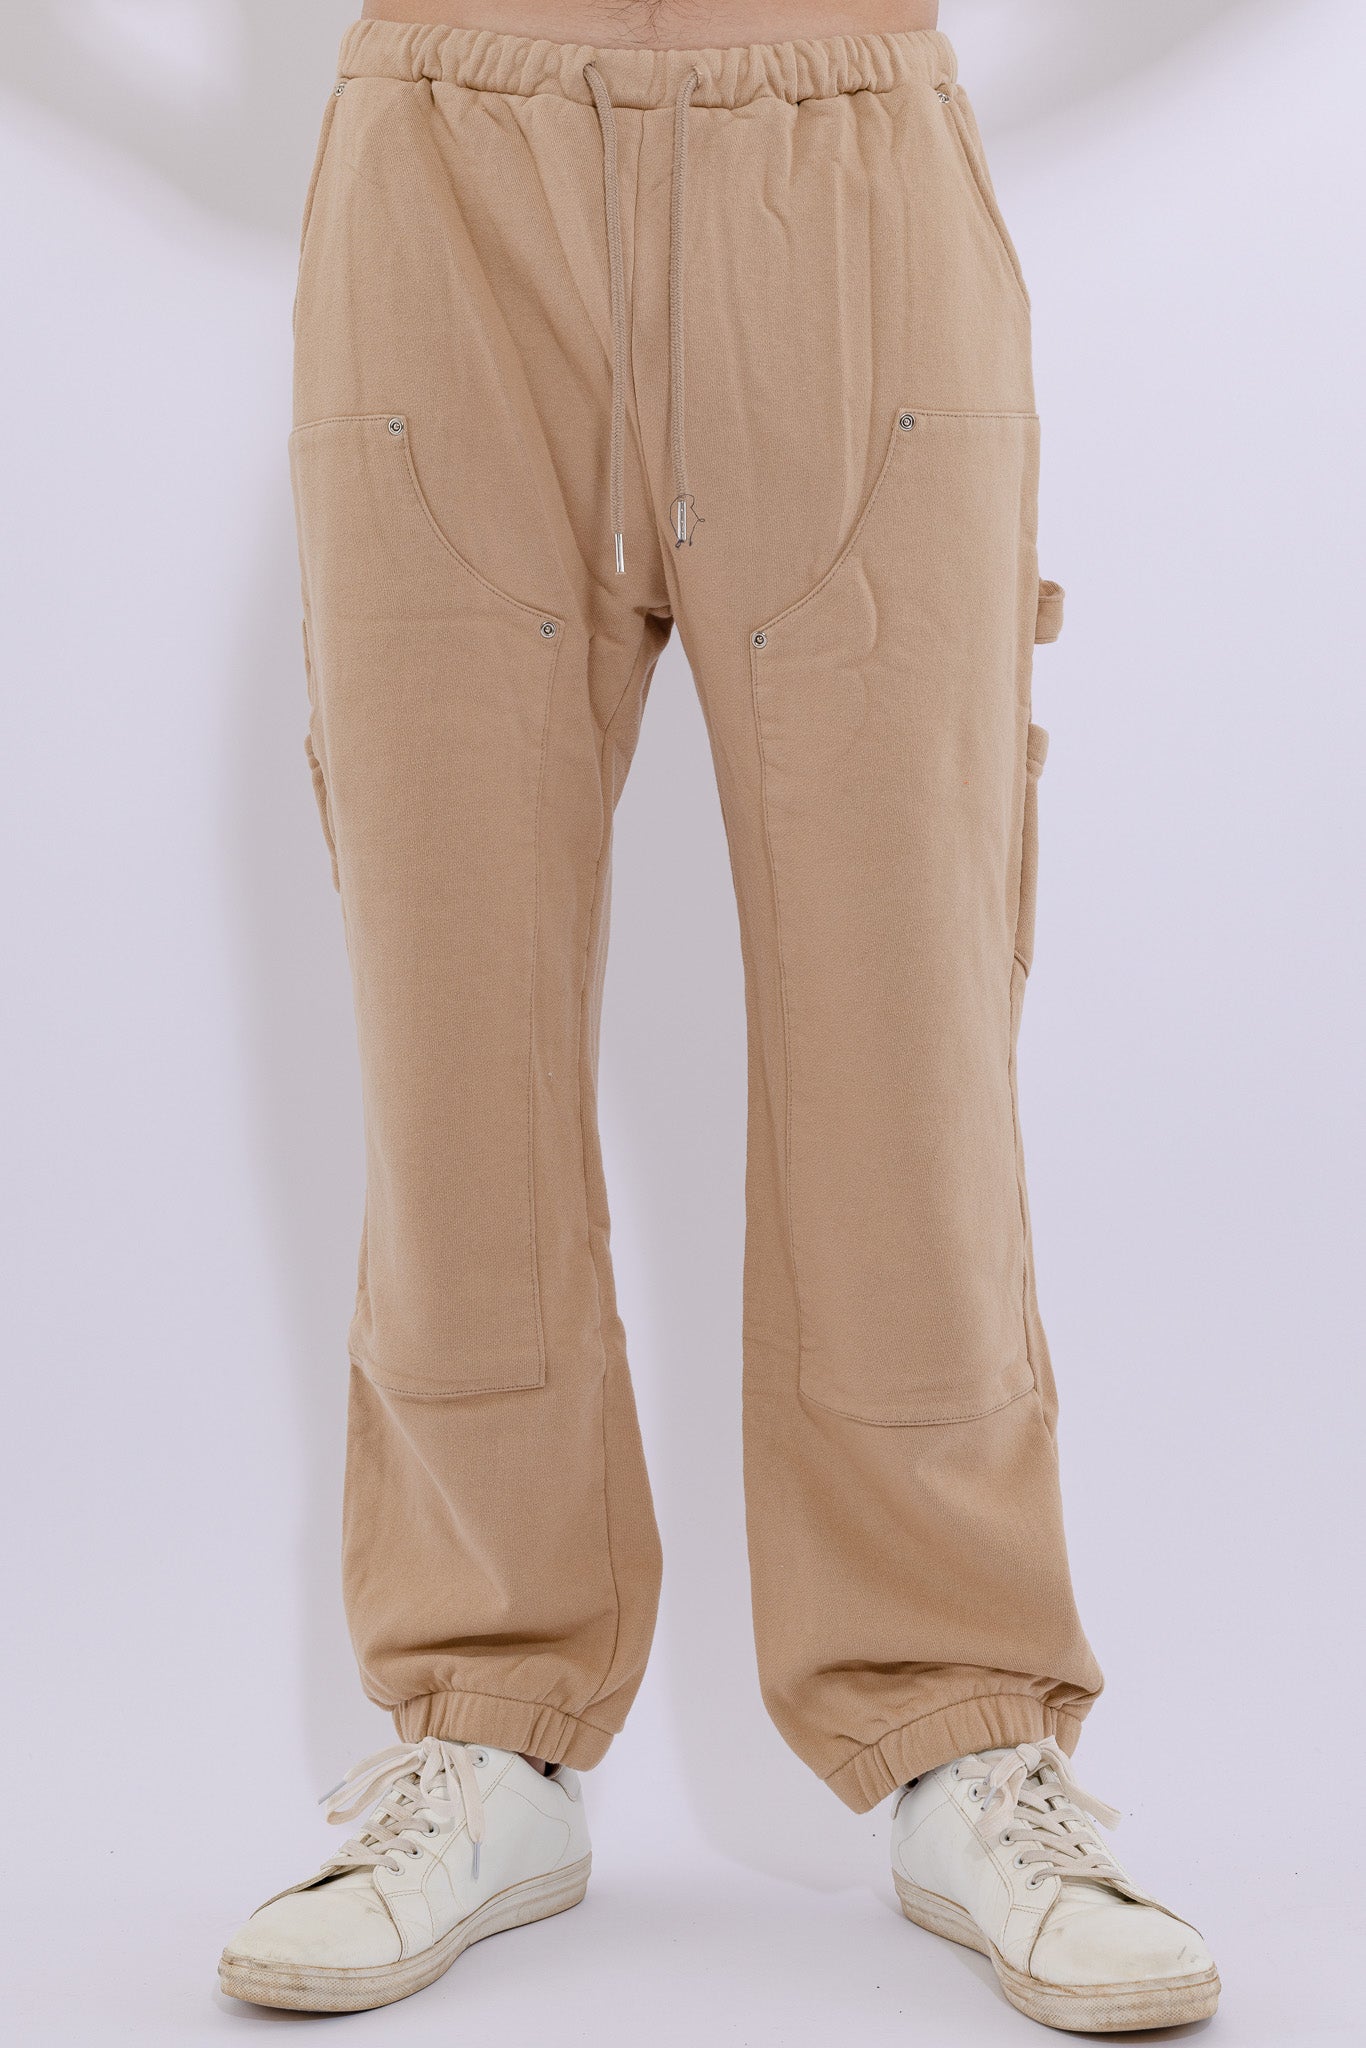 Designed Quality Pants